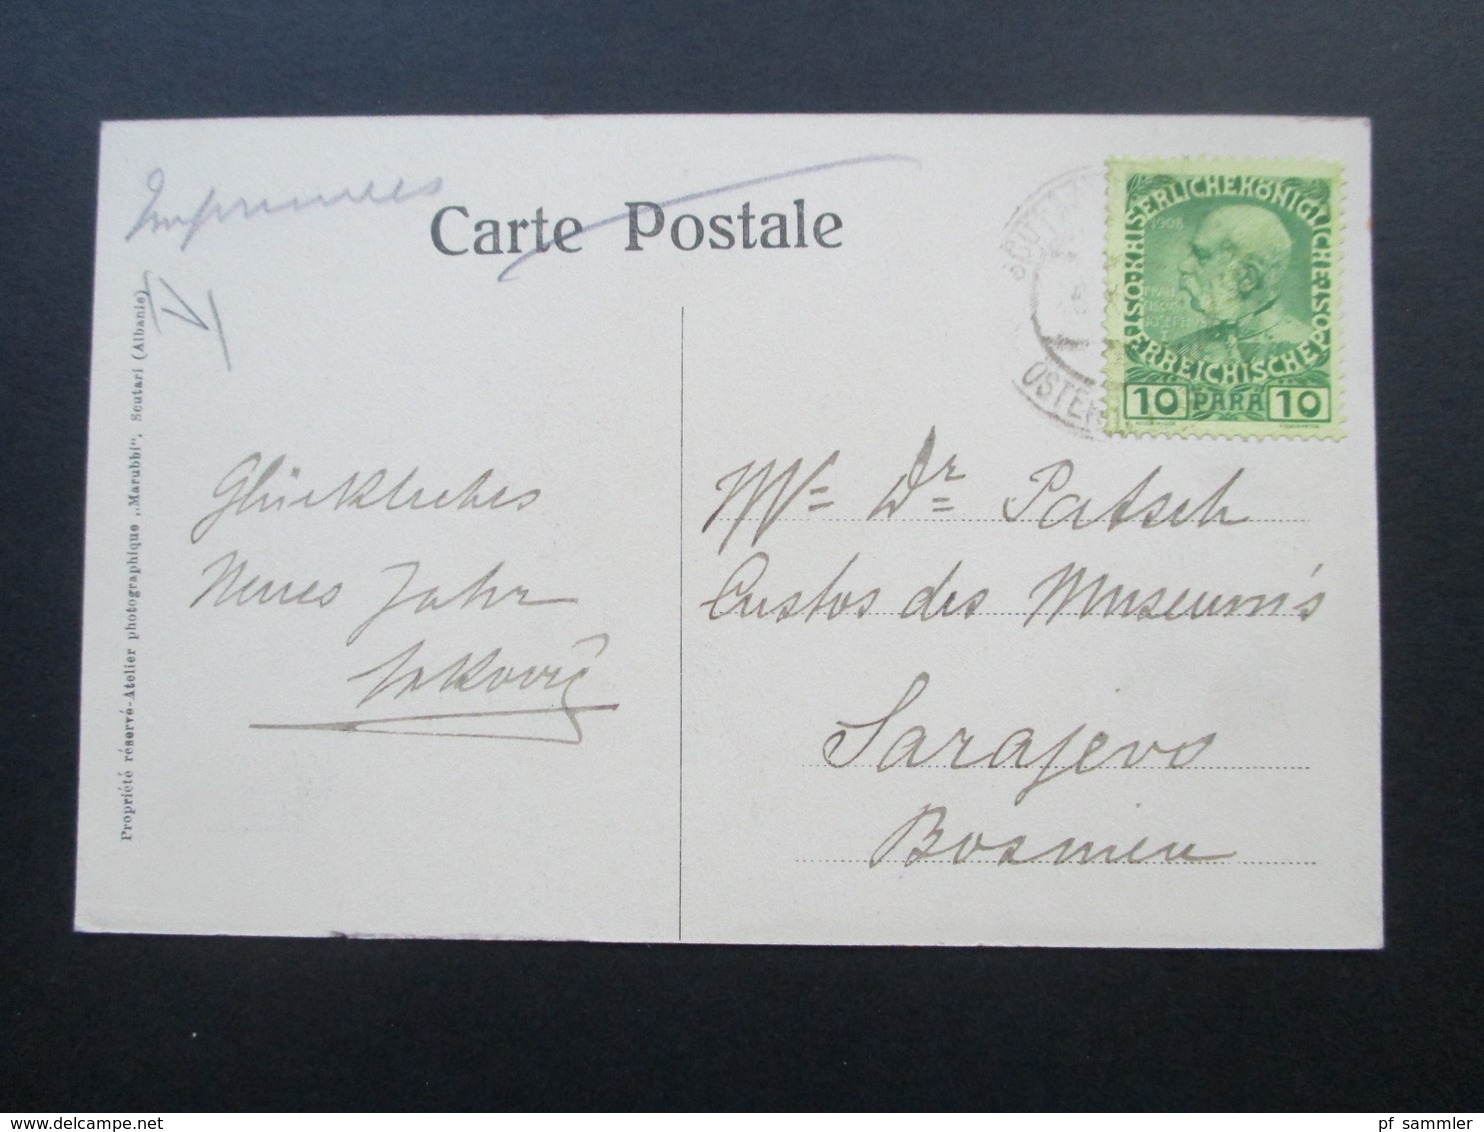 Österreich / Levante Ca.1908 Seltene Postkarte Albanien Mirash Luca Me Shoke - Kastrat. Pistolen / Soldaten. Carl Patsch - Oostenrijkse Levant